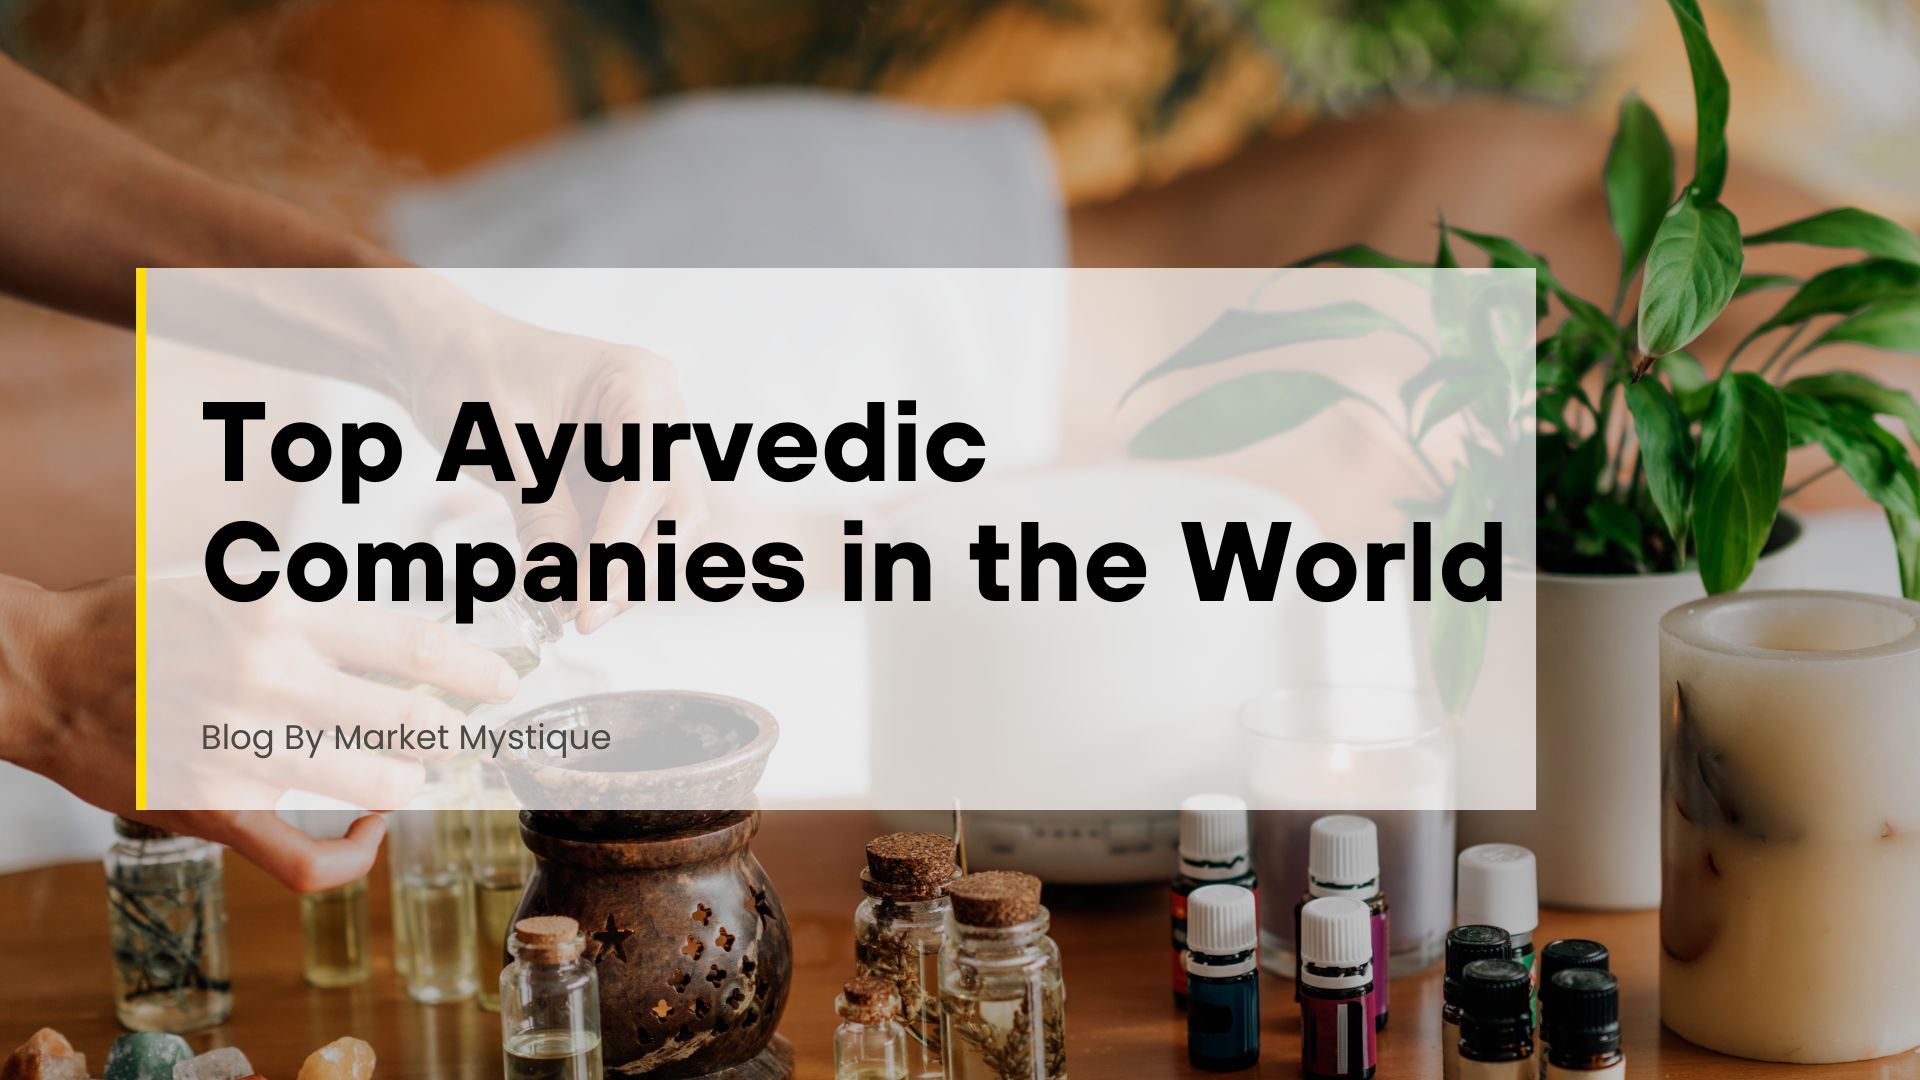 Ayurvedic Companies in the World